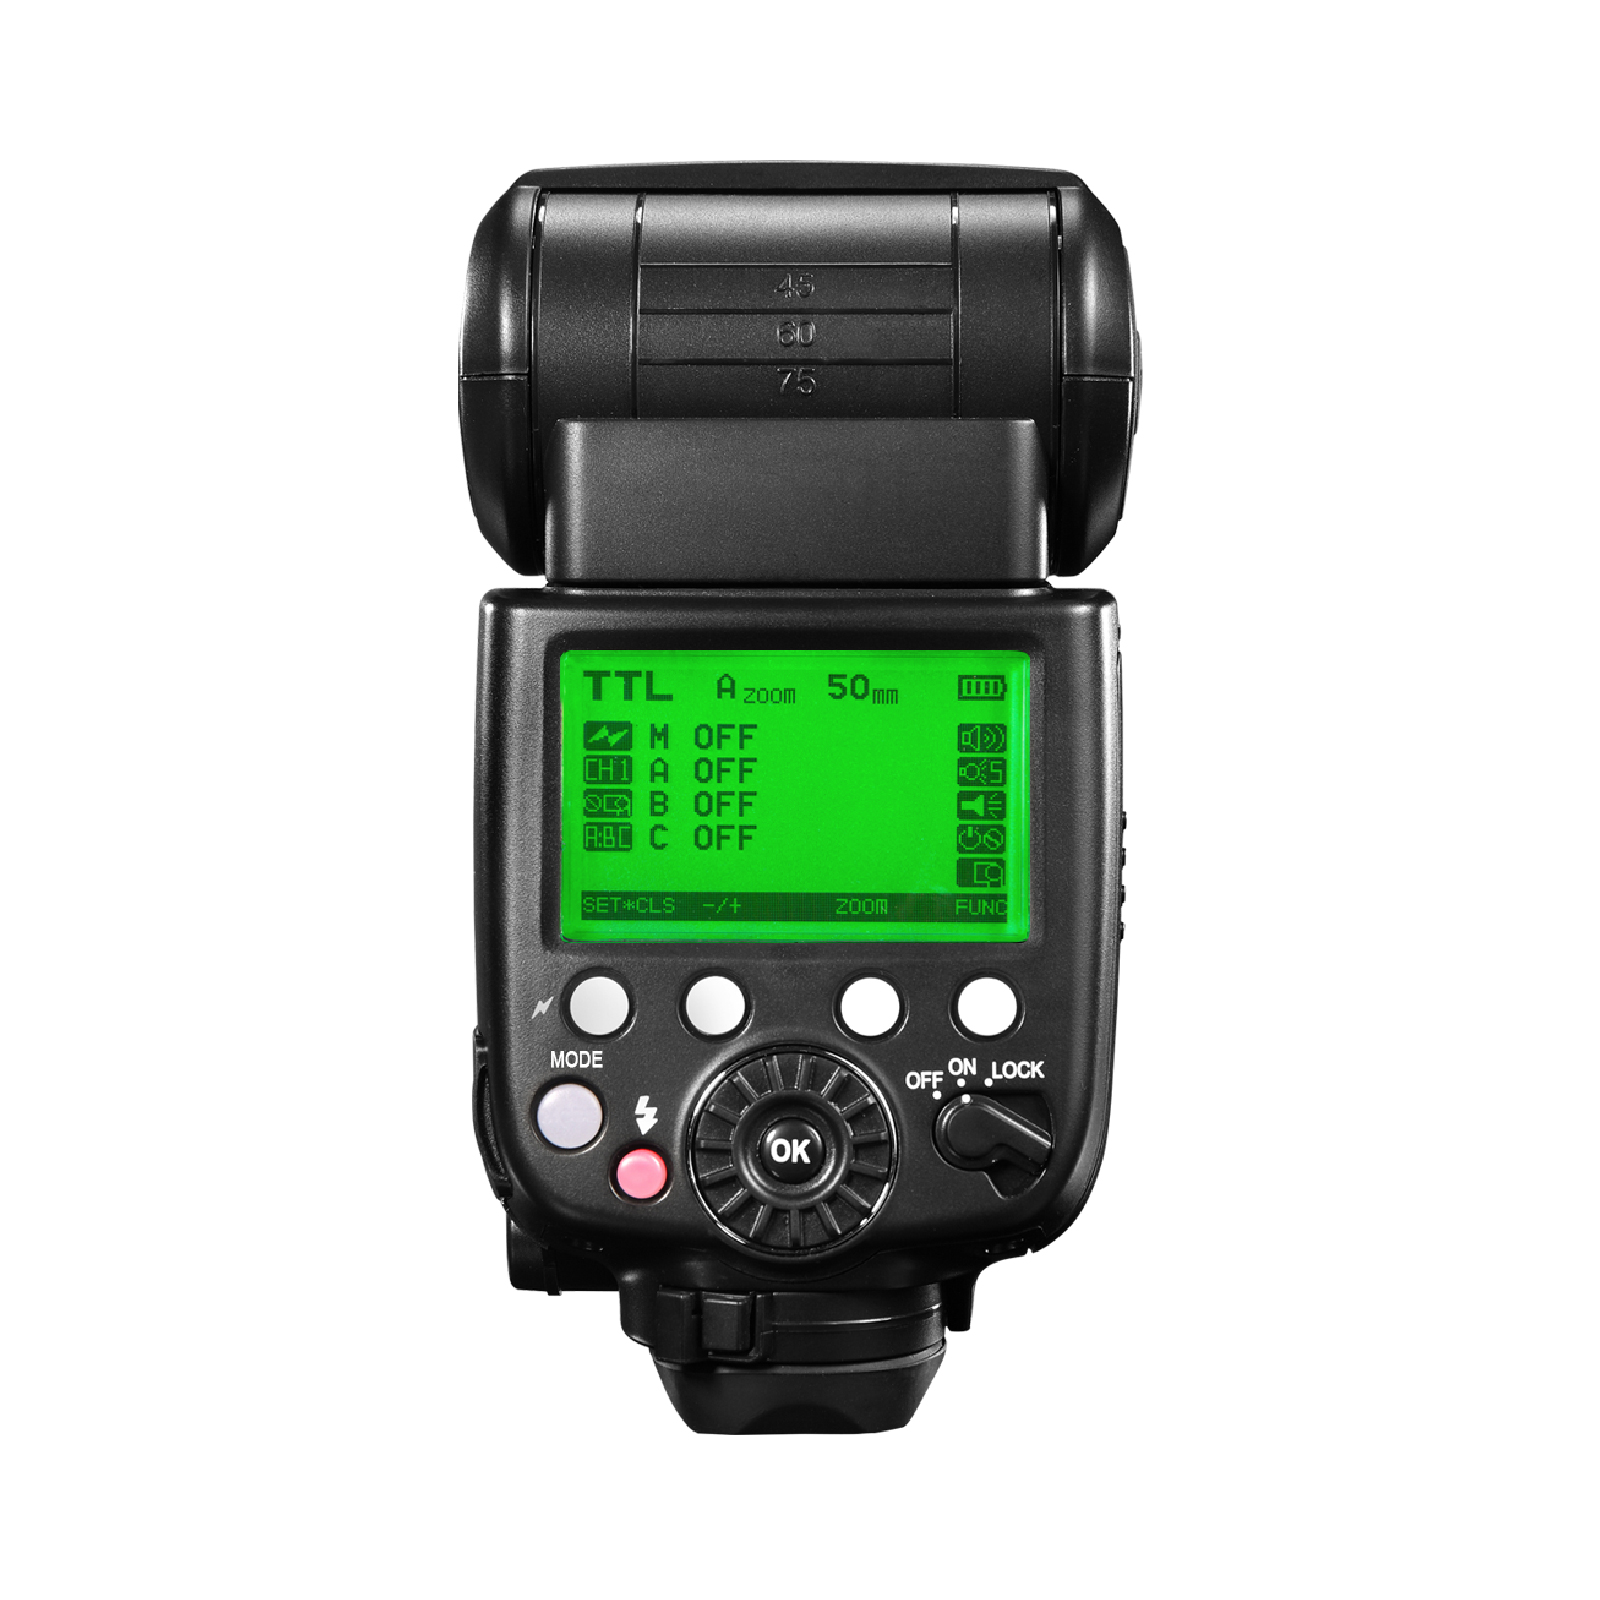 Pixel x800n standard speedlite for Nikon, high speed synchronization and powerful performance.